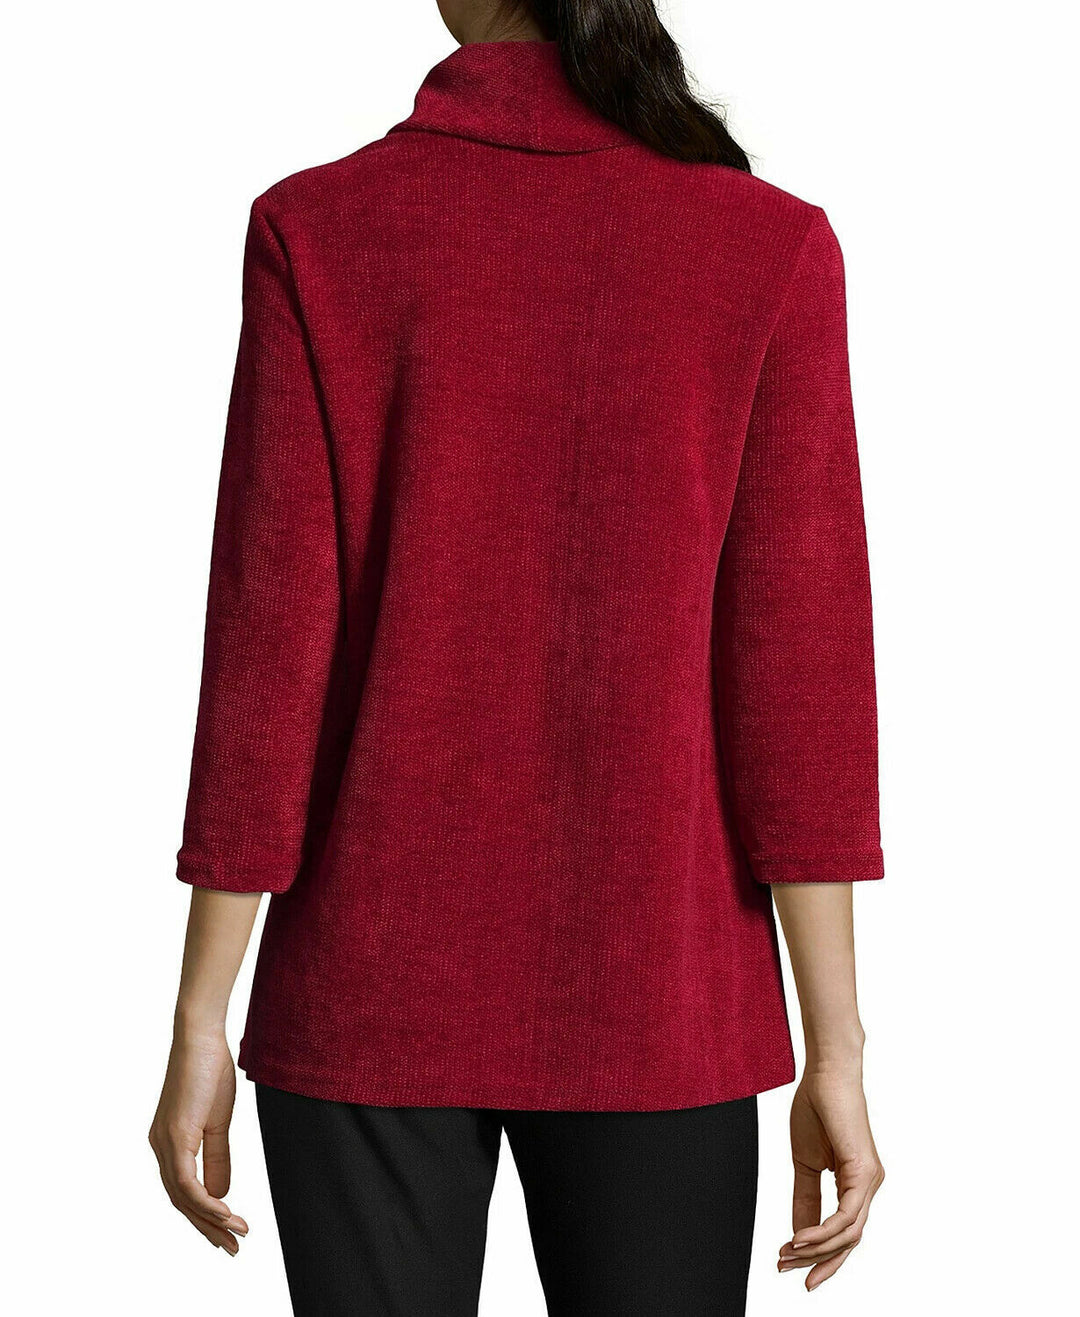 John Paul Richard Women's Chenille Cowl Neck Sweater Red 3/4 Sleeve Size S